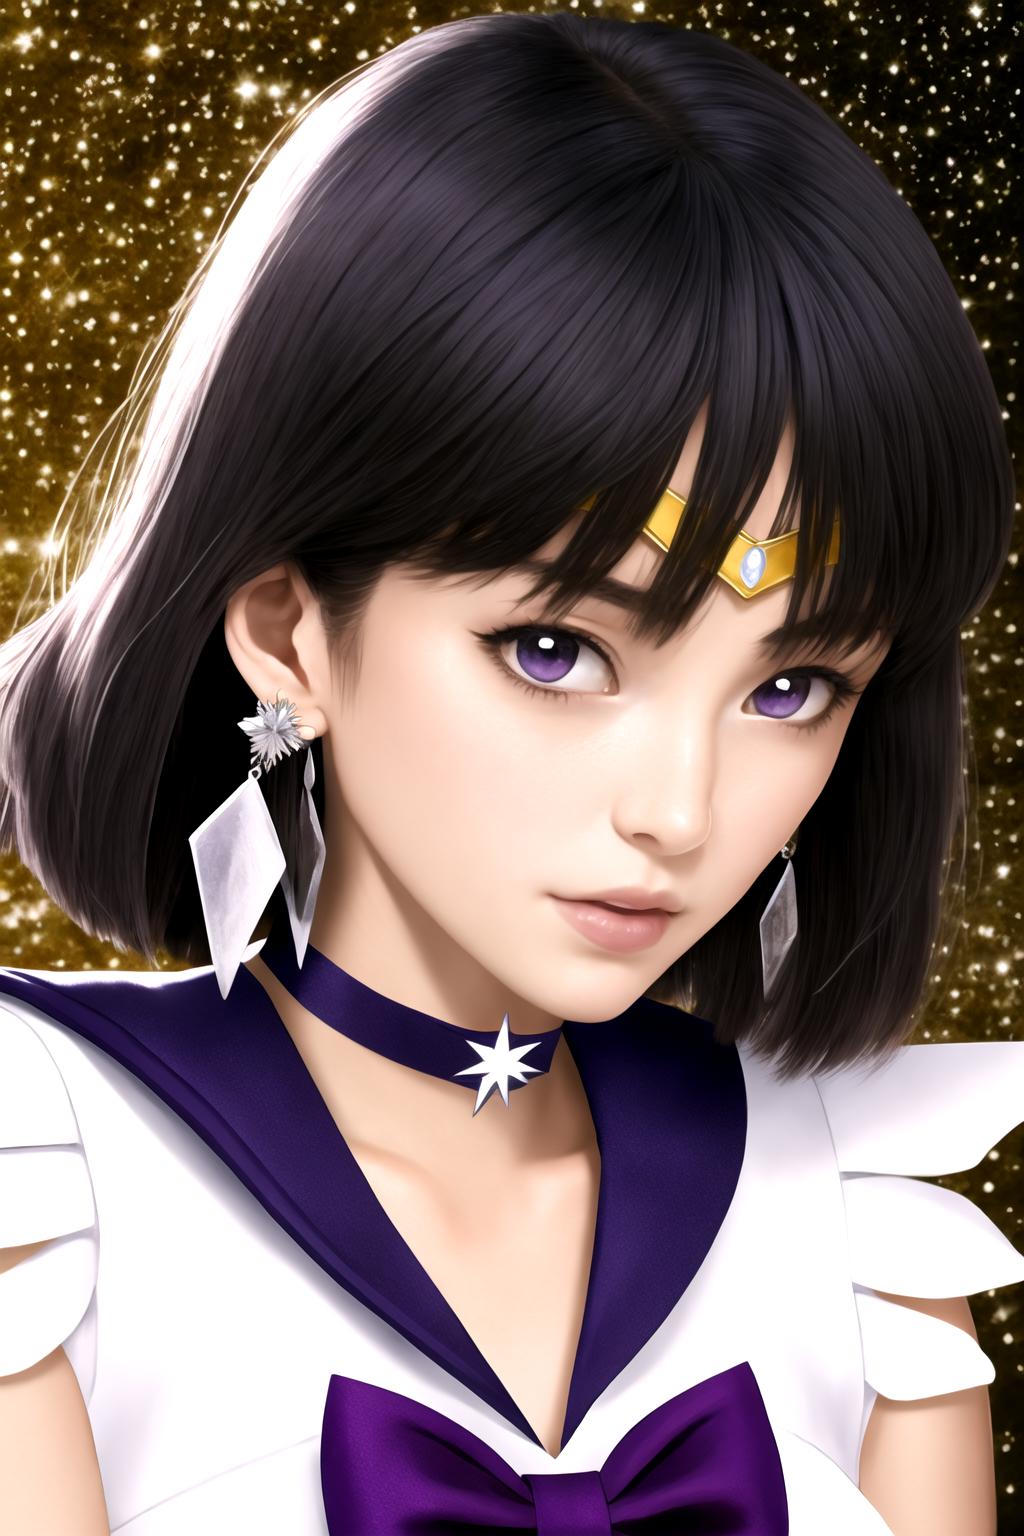 Hotaru Tomoe - Sailor Saturn - Character LORA image by Konan